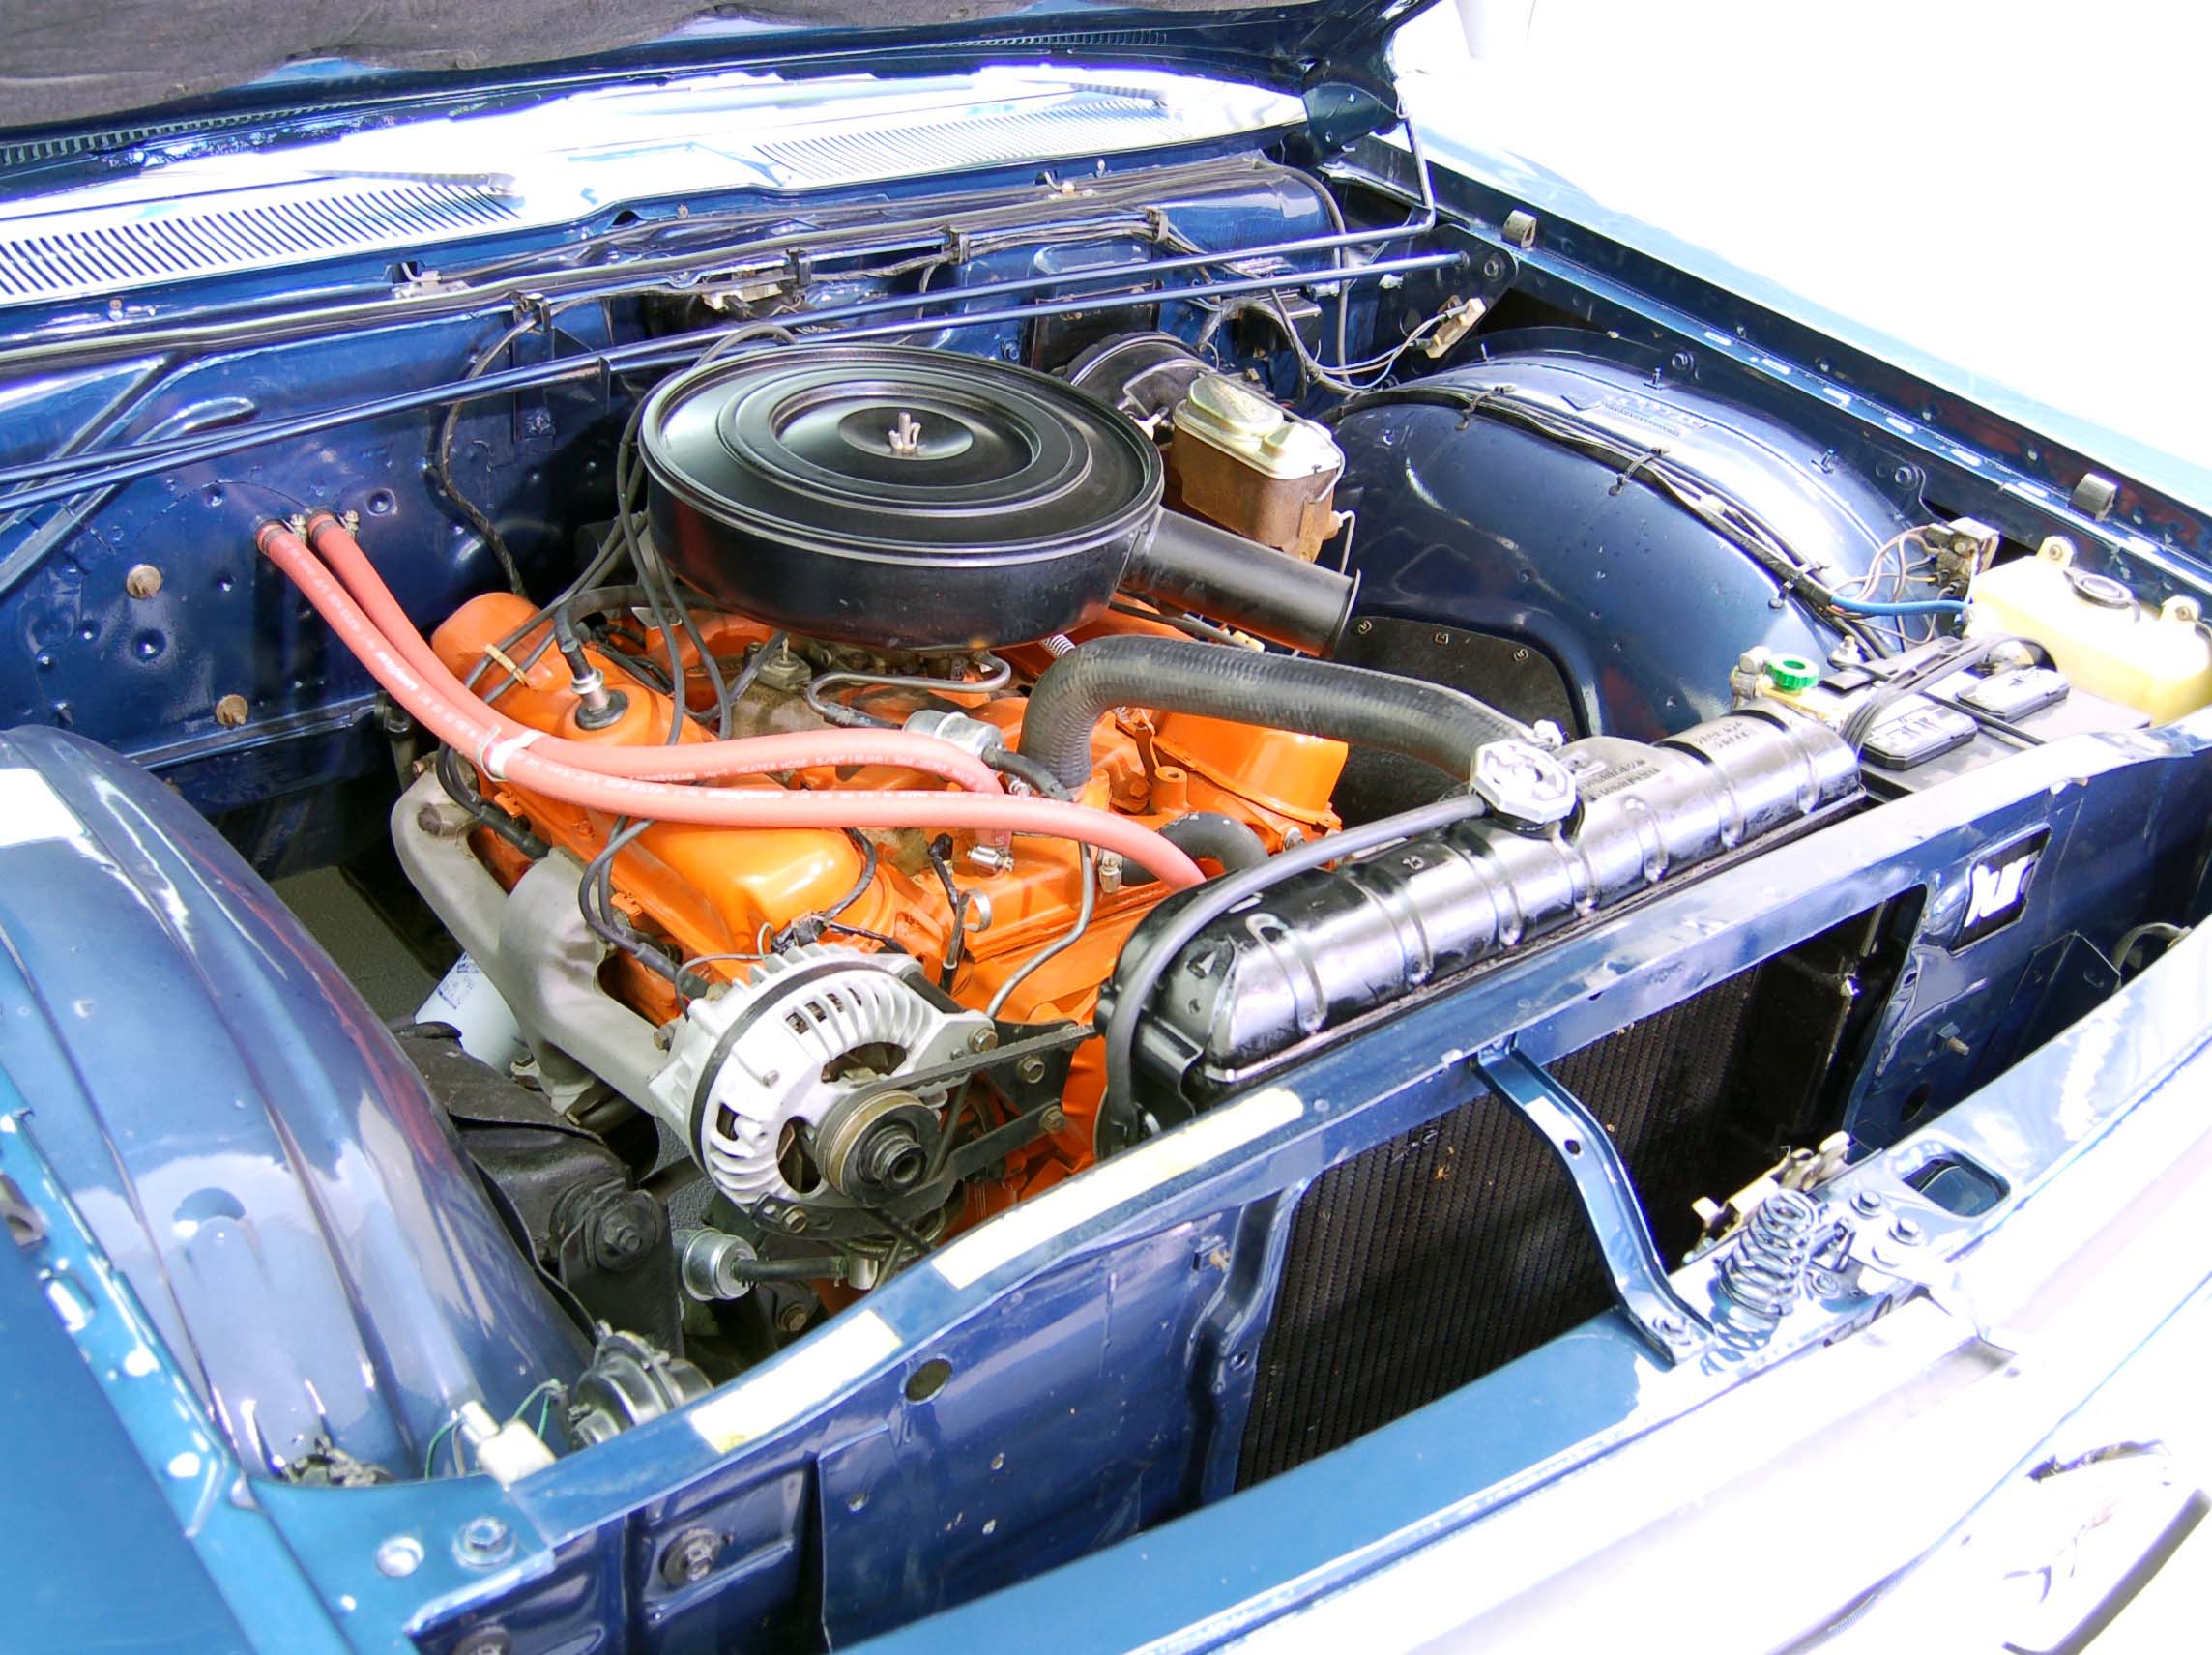 1967 Plymouth Fury III